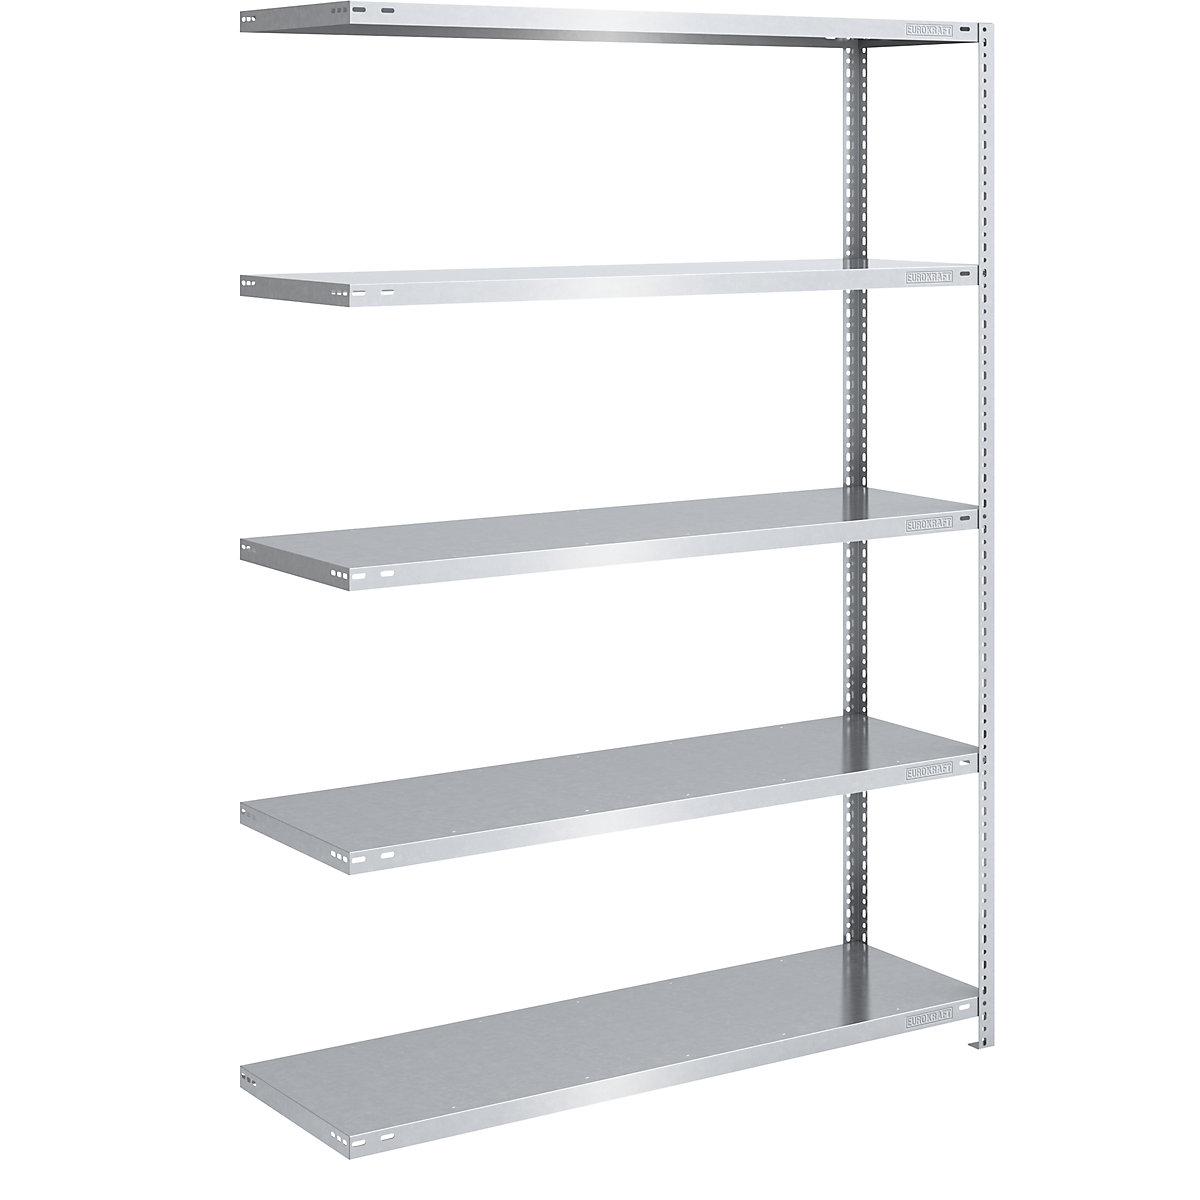 Bolt-together shelf unit, light duty, zinc plated – eurokraft pro, shelf unit height 2000 mm, shelf width 1300 mm, depth 500 mm, extension shelf unit-14